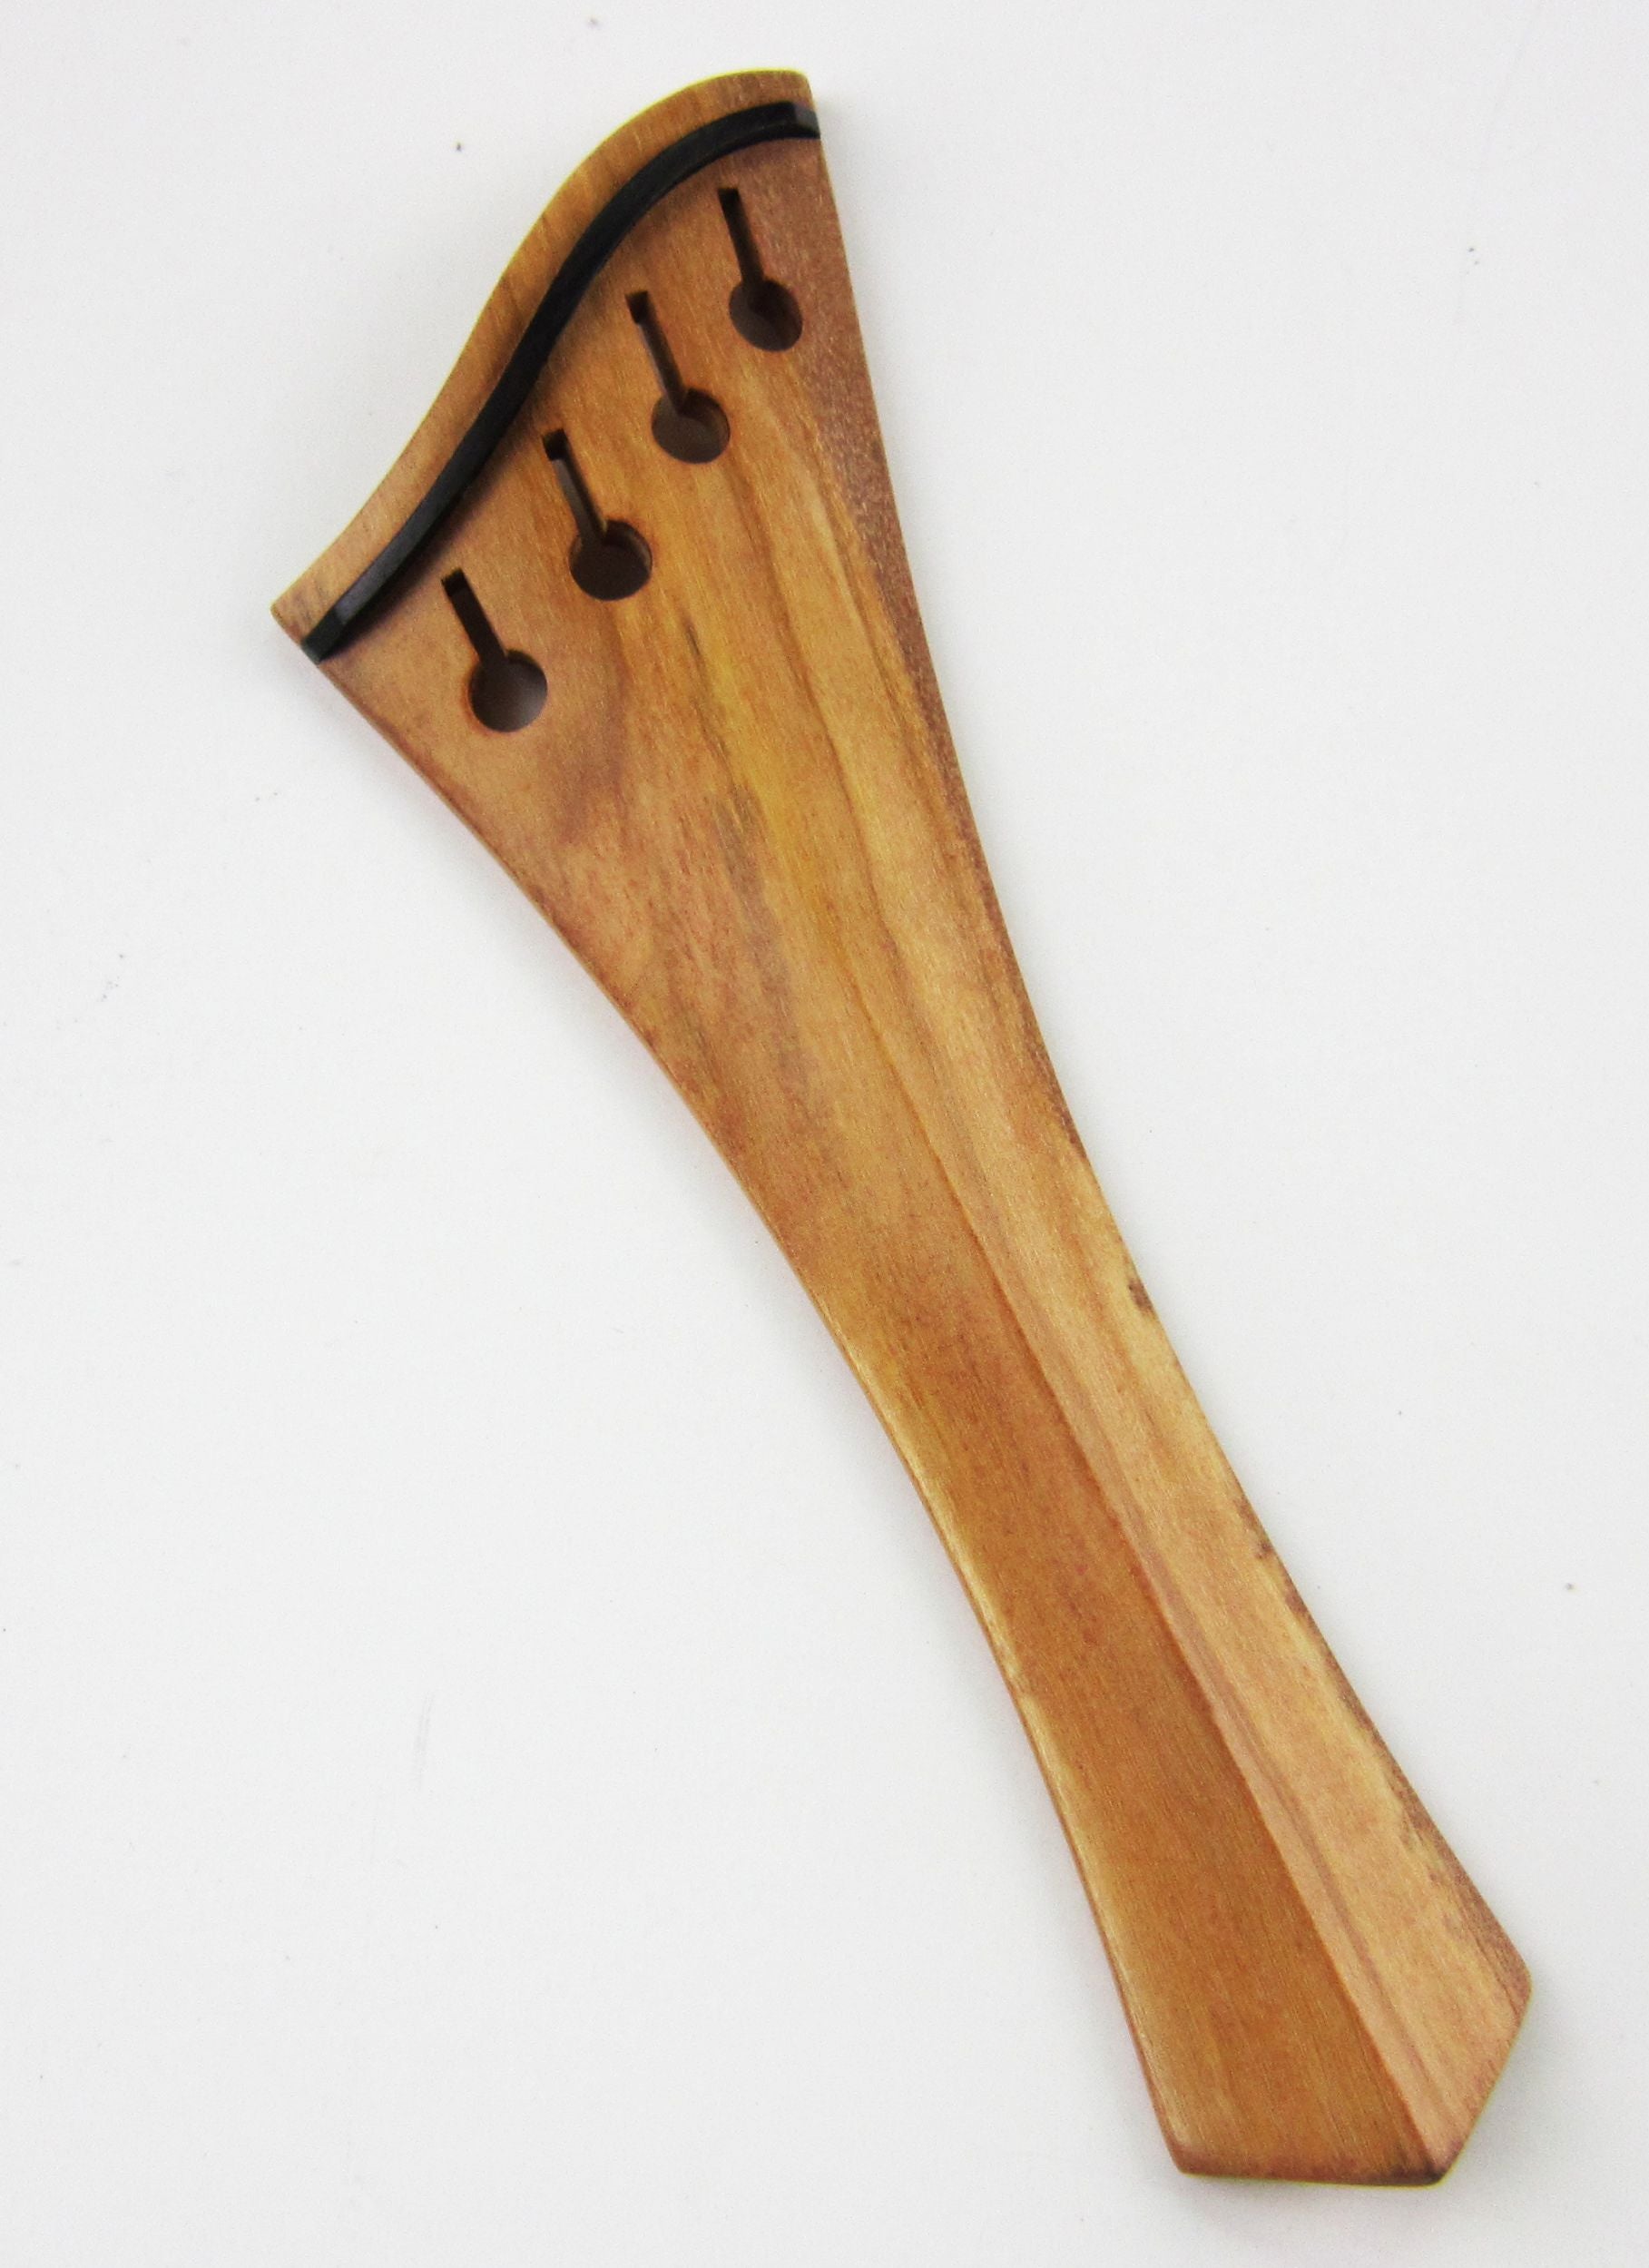 Viola tailpiece-"Harp"-Italian Olive.-135mm